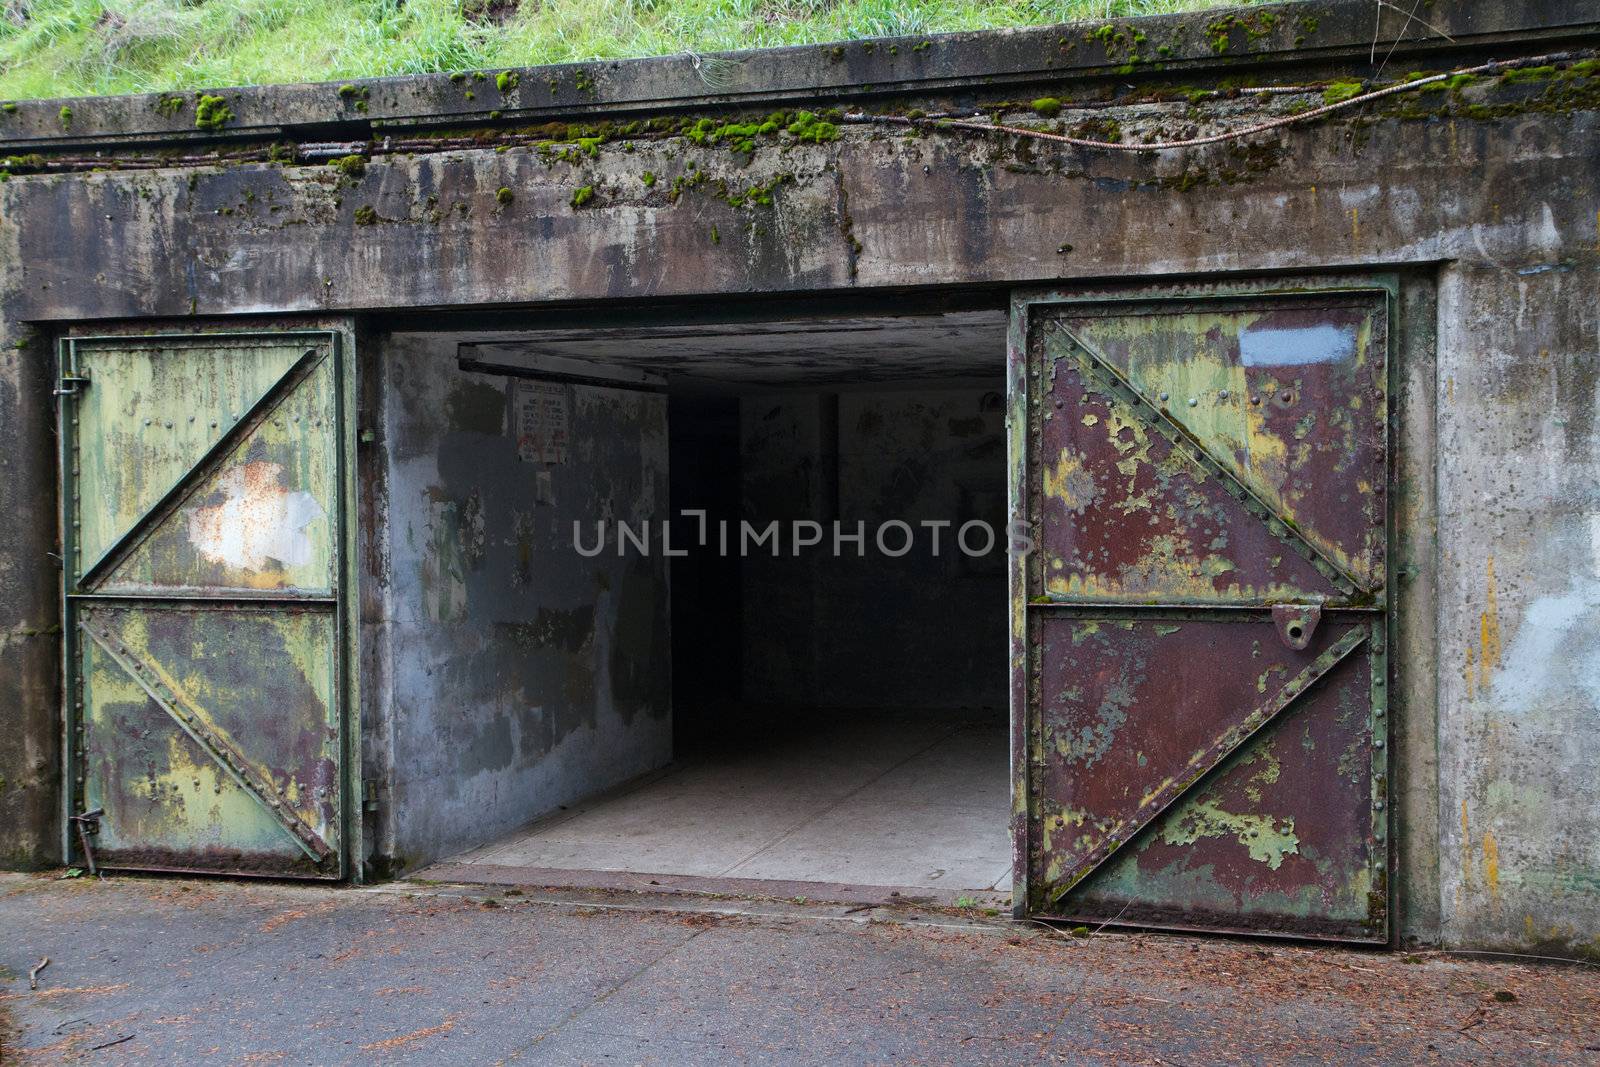 Army Bunker Entrance by bobkeenan